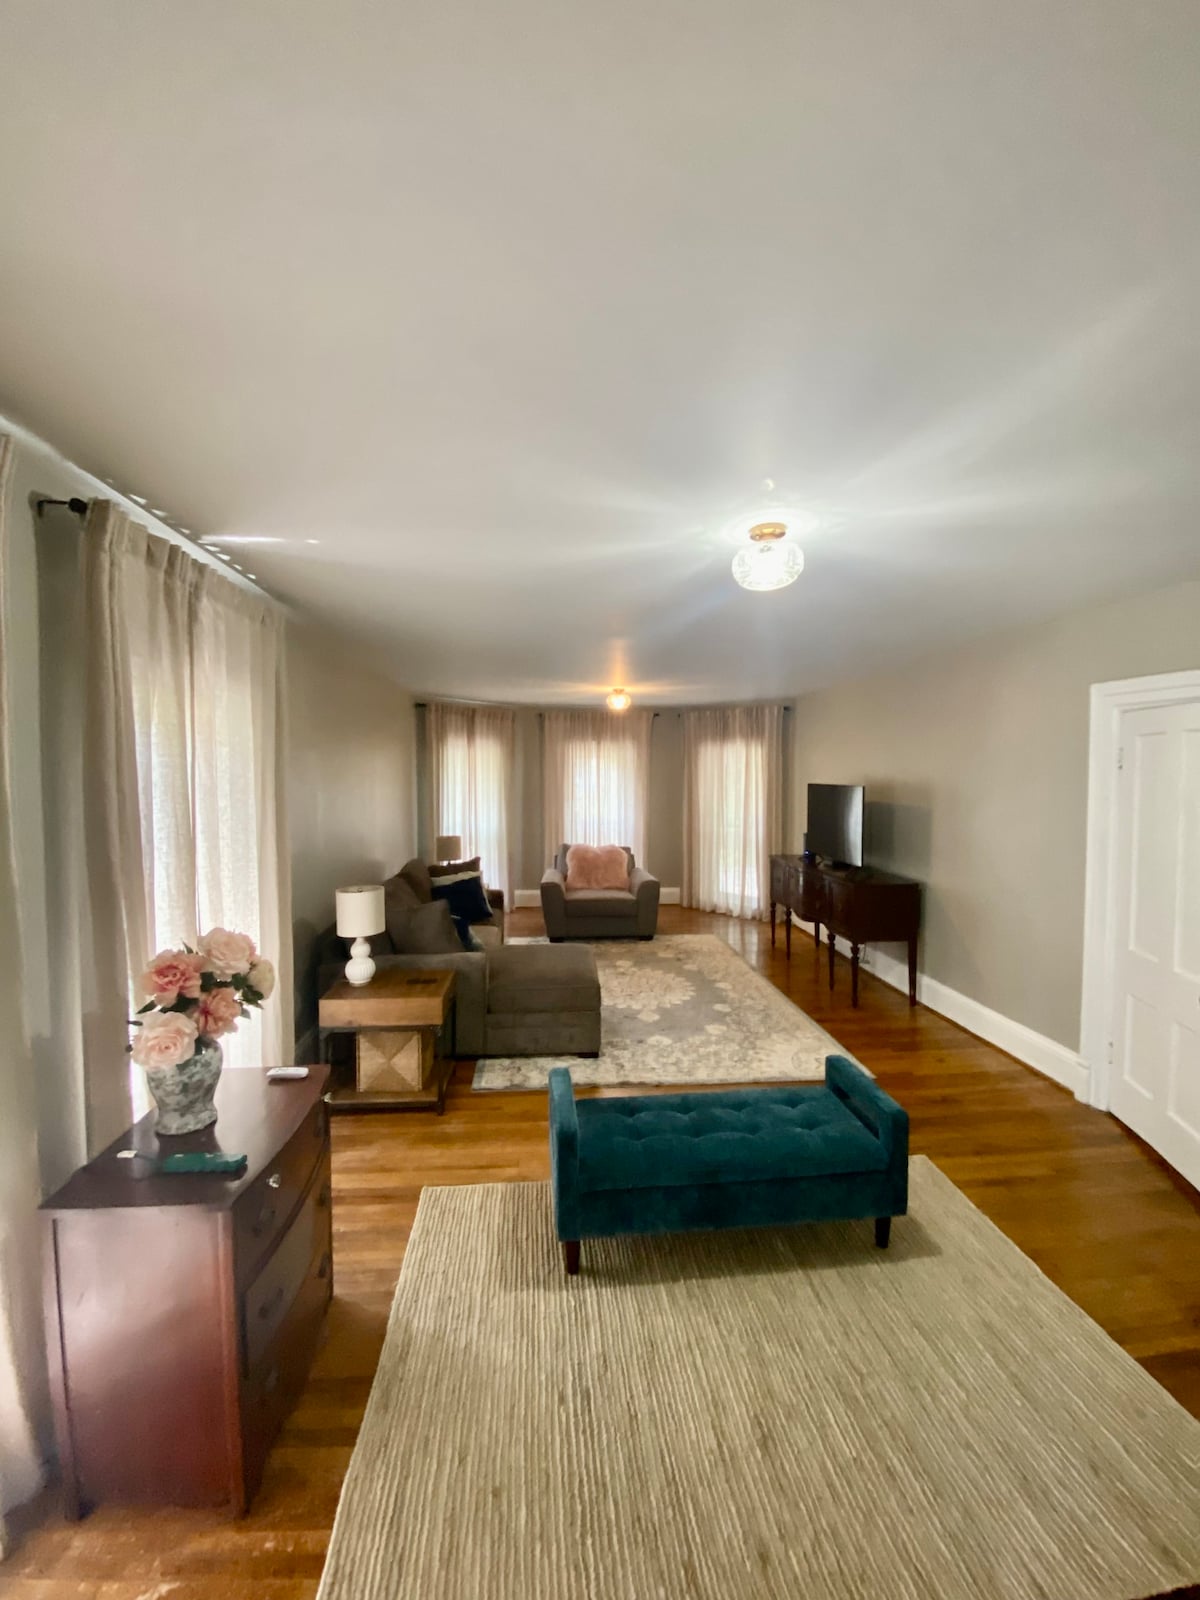 Elegant 2 bedroom apt 1 block from SUNY Fredonia